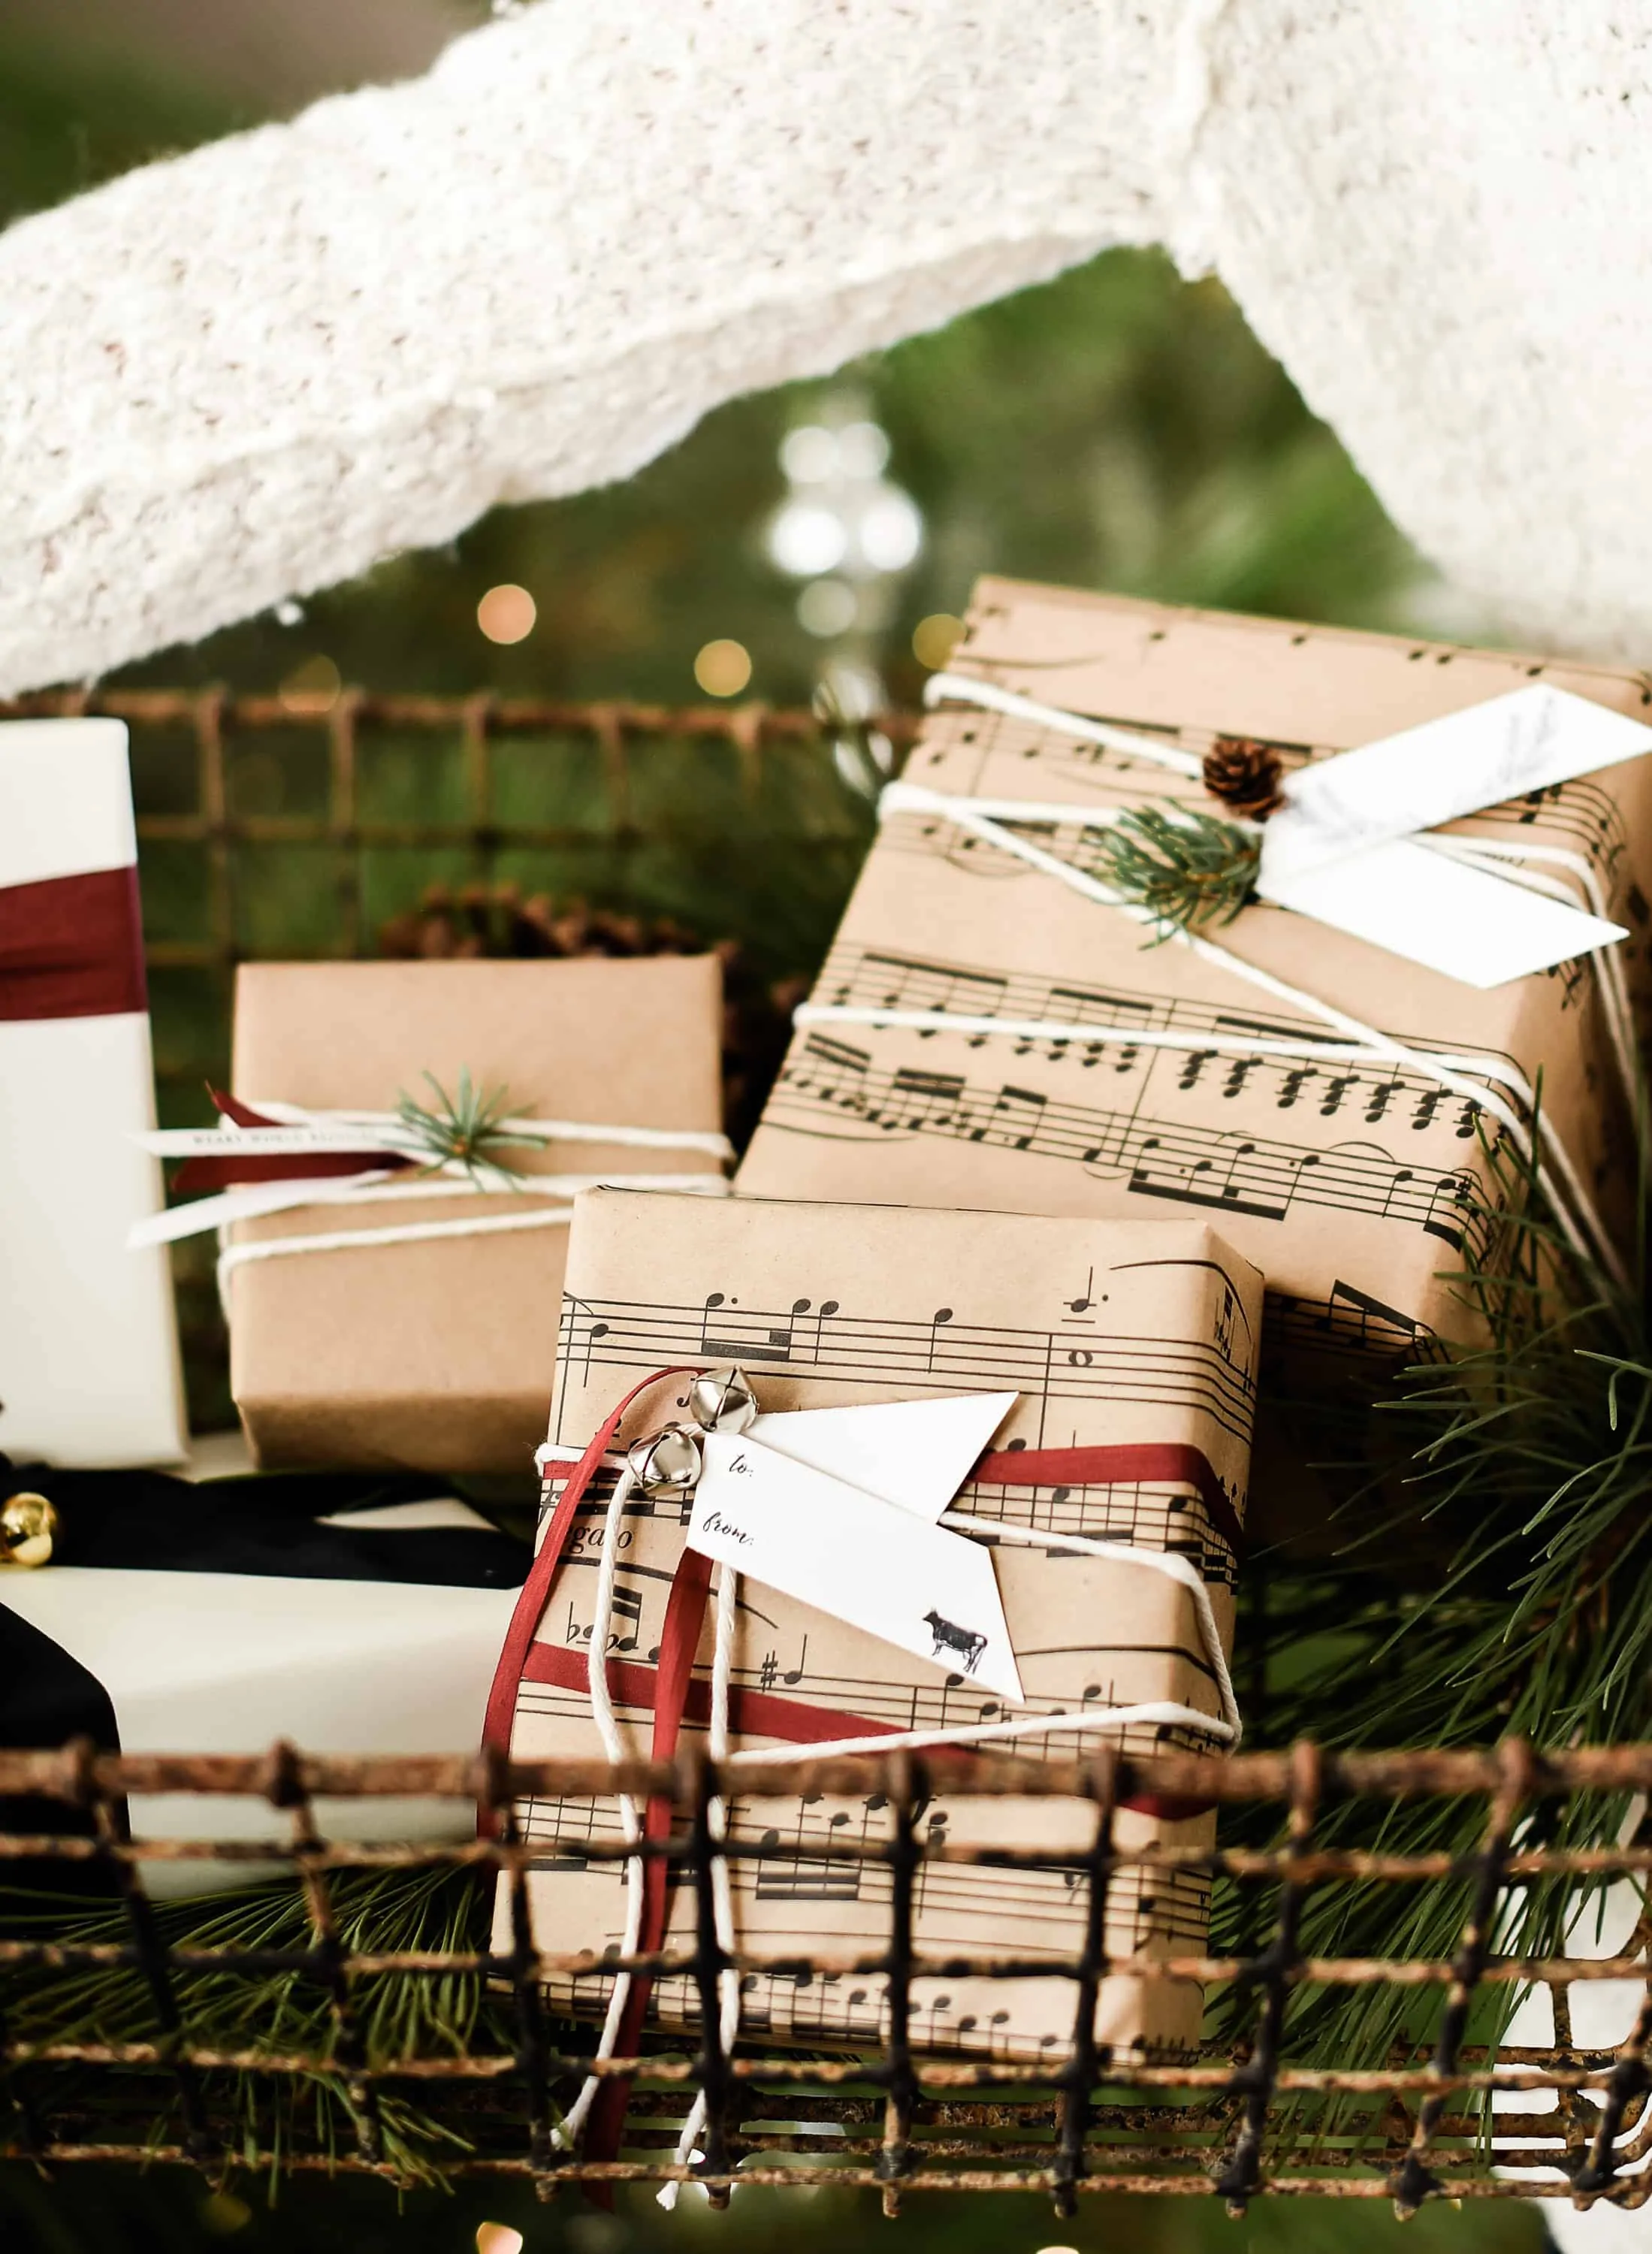 Creative Gift Wrap Ideas and Christmas Printables